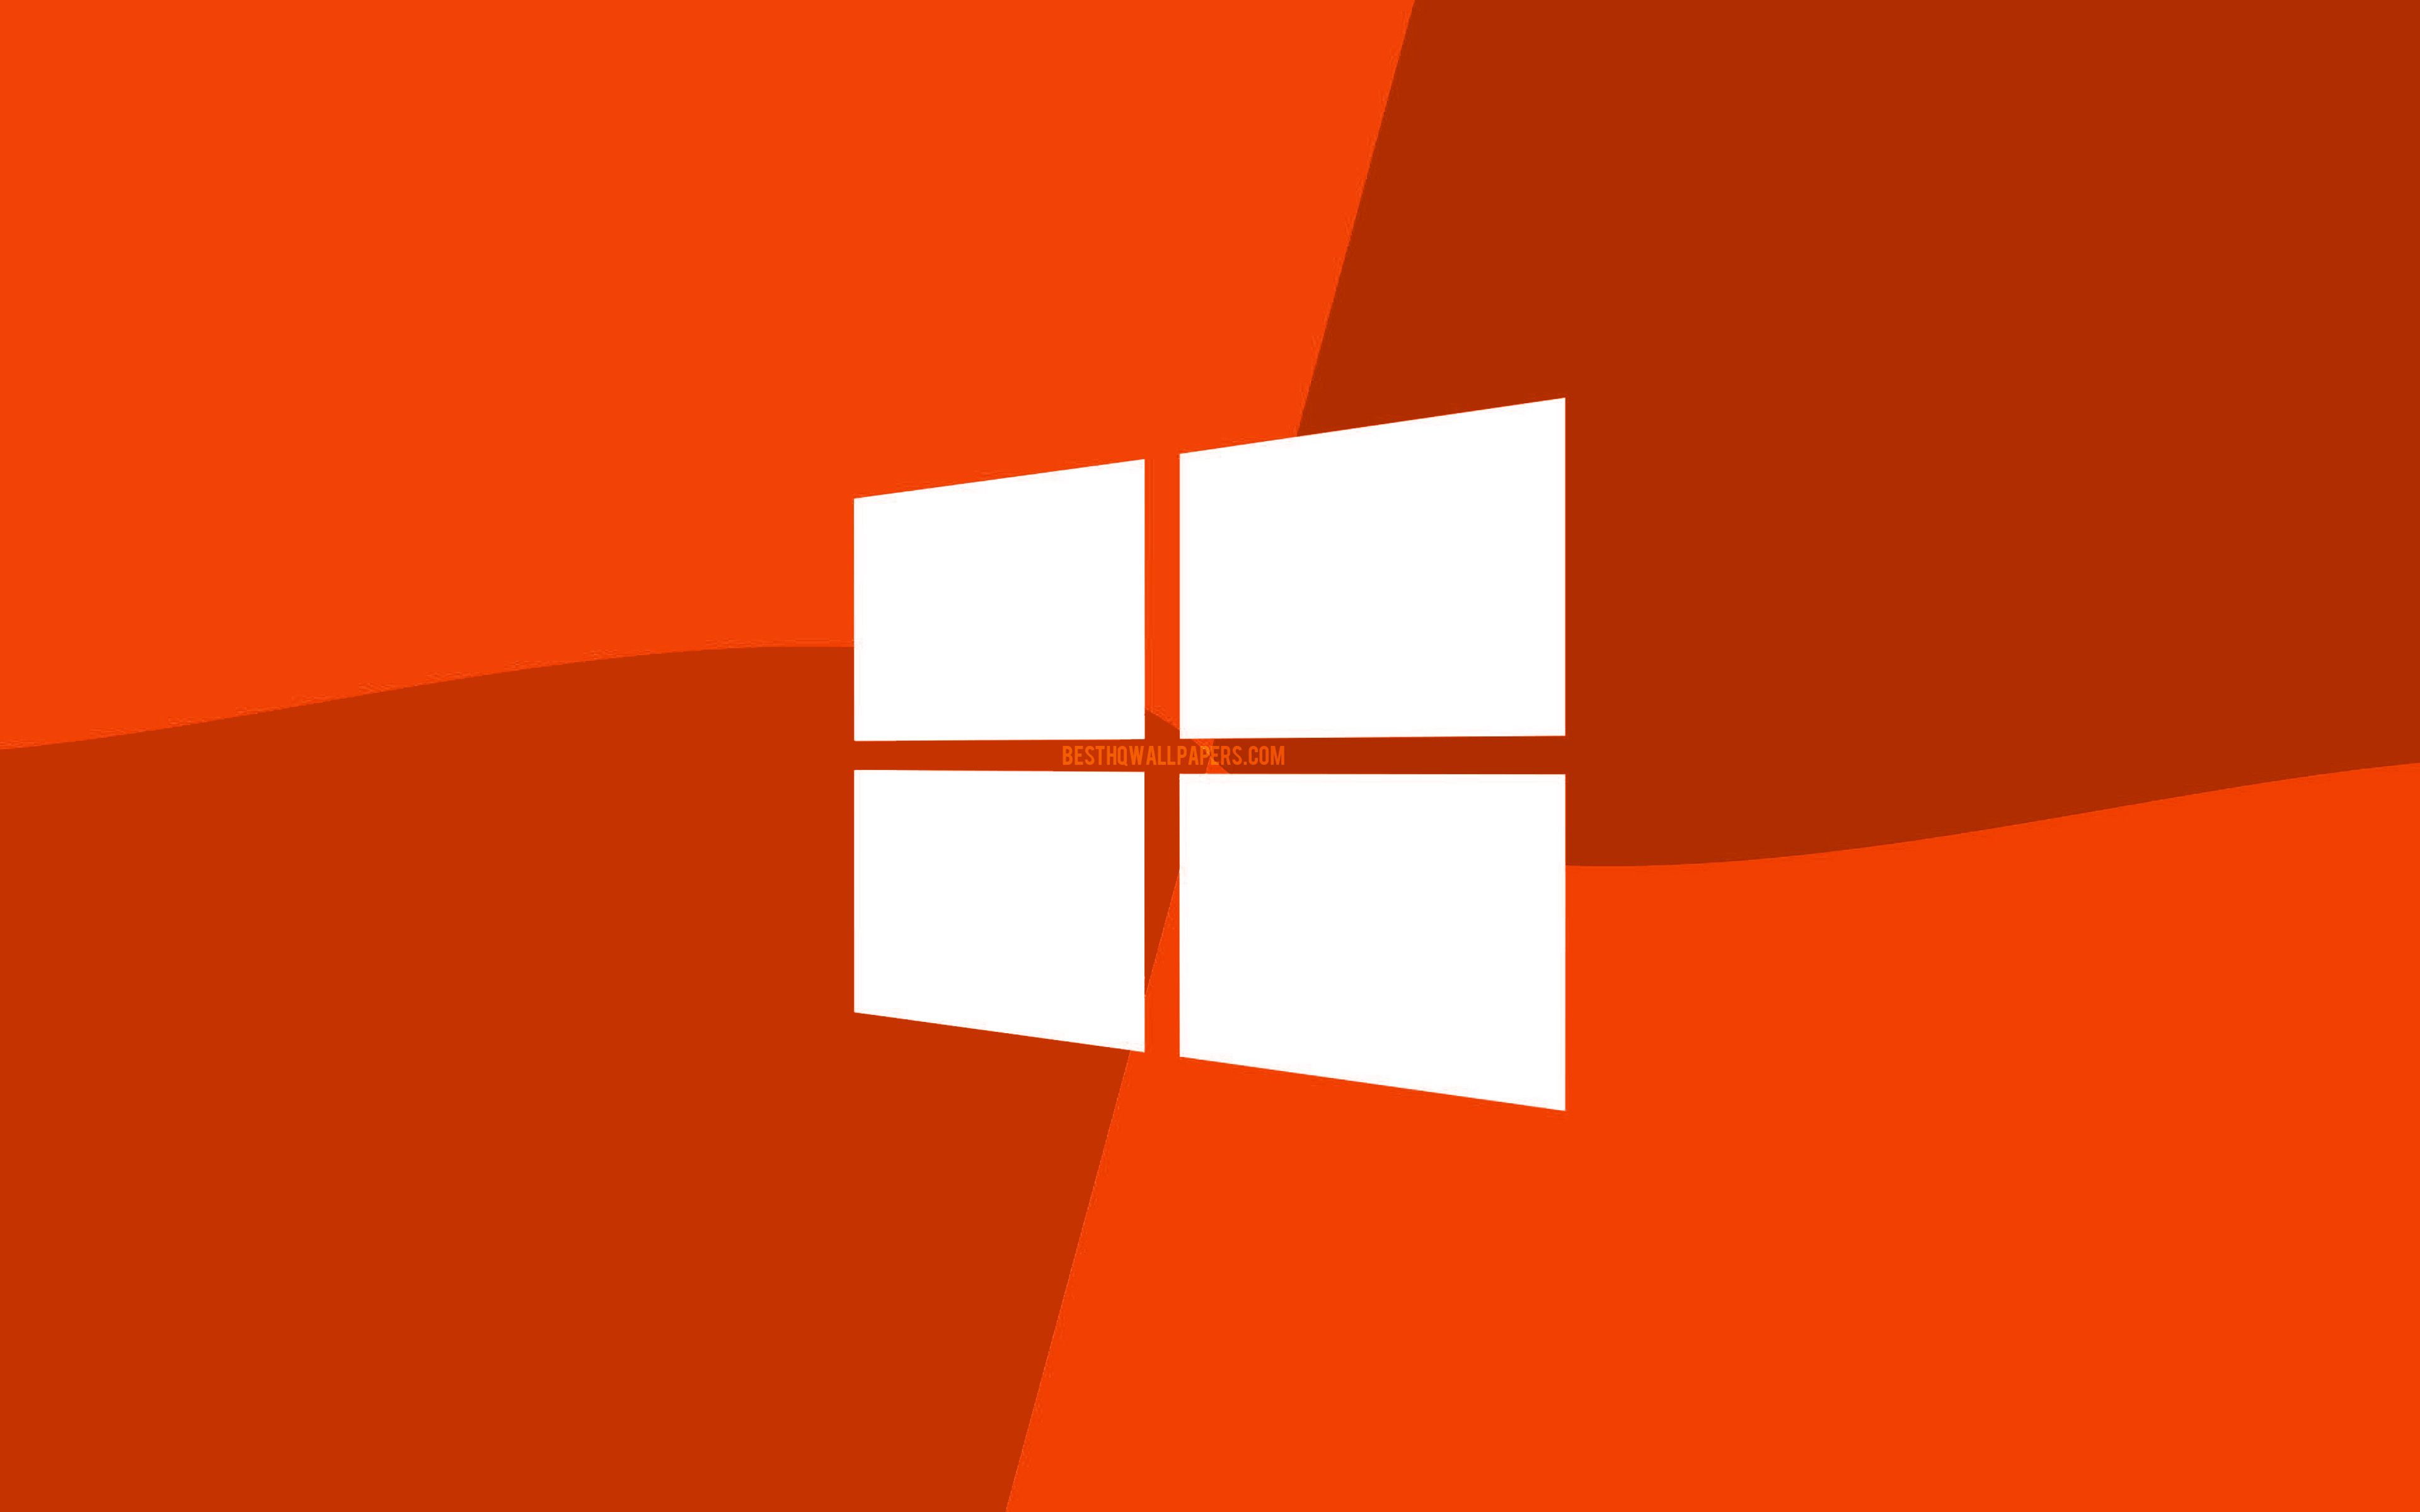 Download wallpaper Windows 10 orange logo, 4k, Microsoft logo, minimal, OS, orange background, creative, Windows artwork, Windows 10 logo for desktop with resolution 3840x2400. High Quality HD picture wallpaper